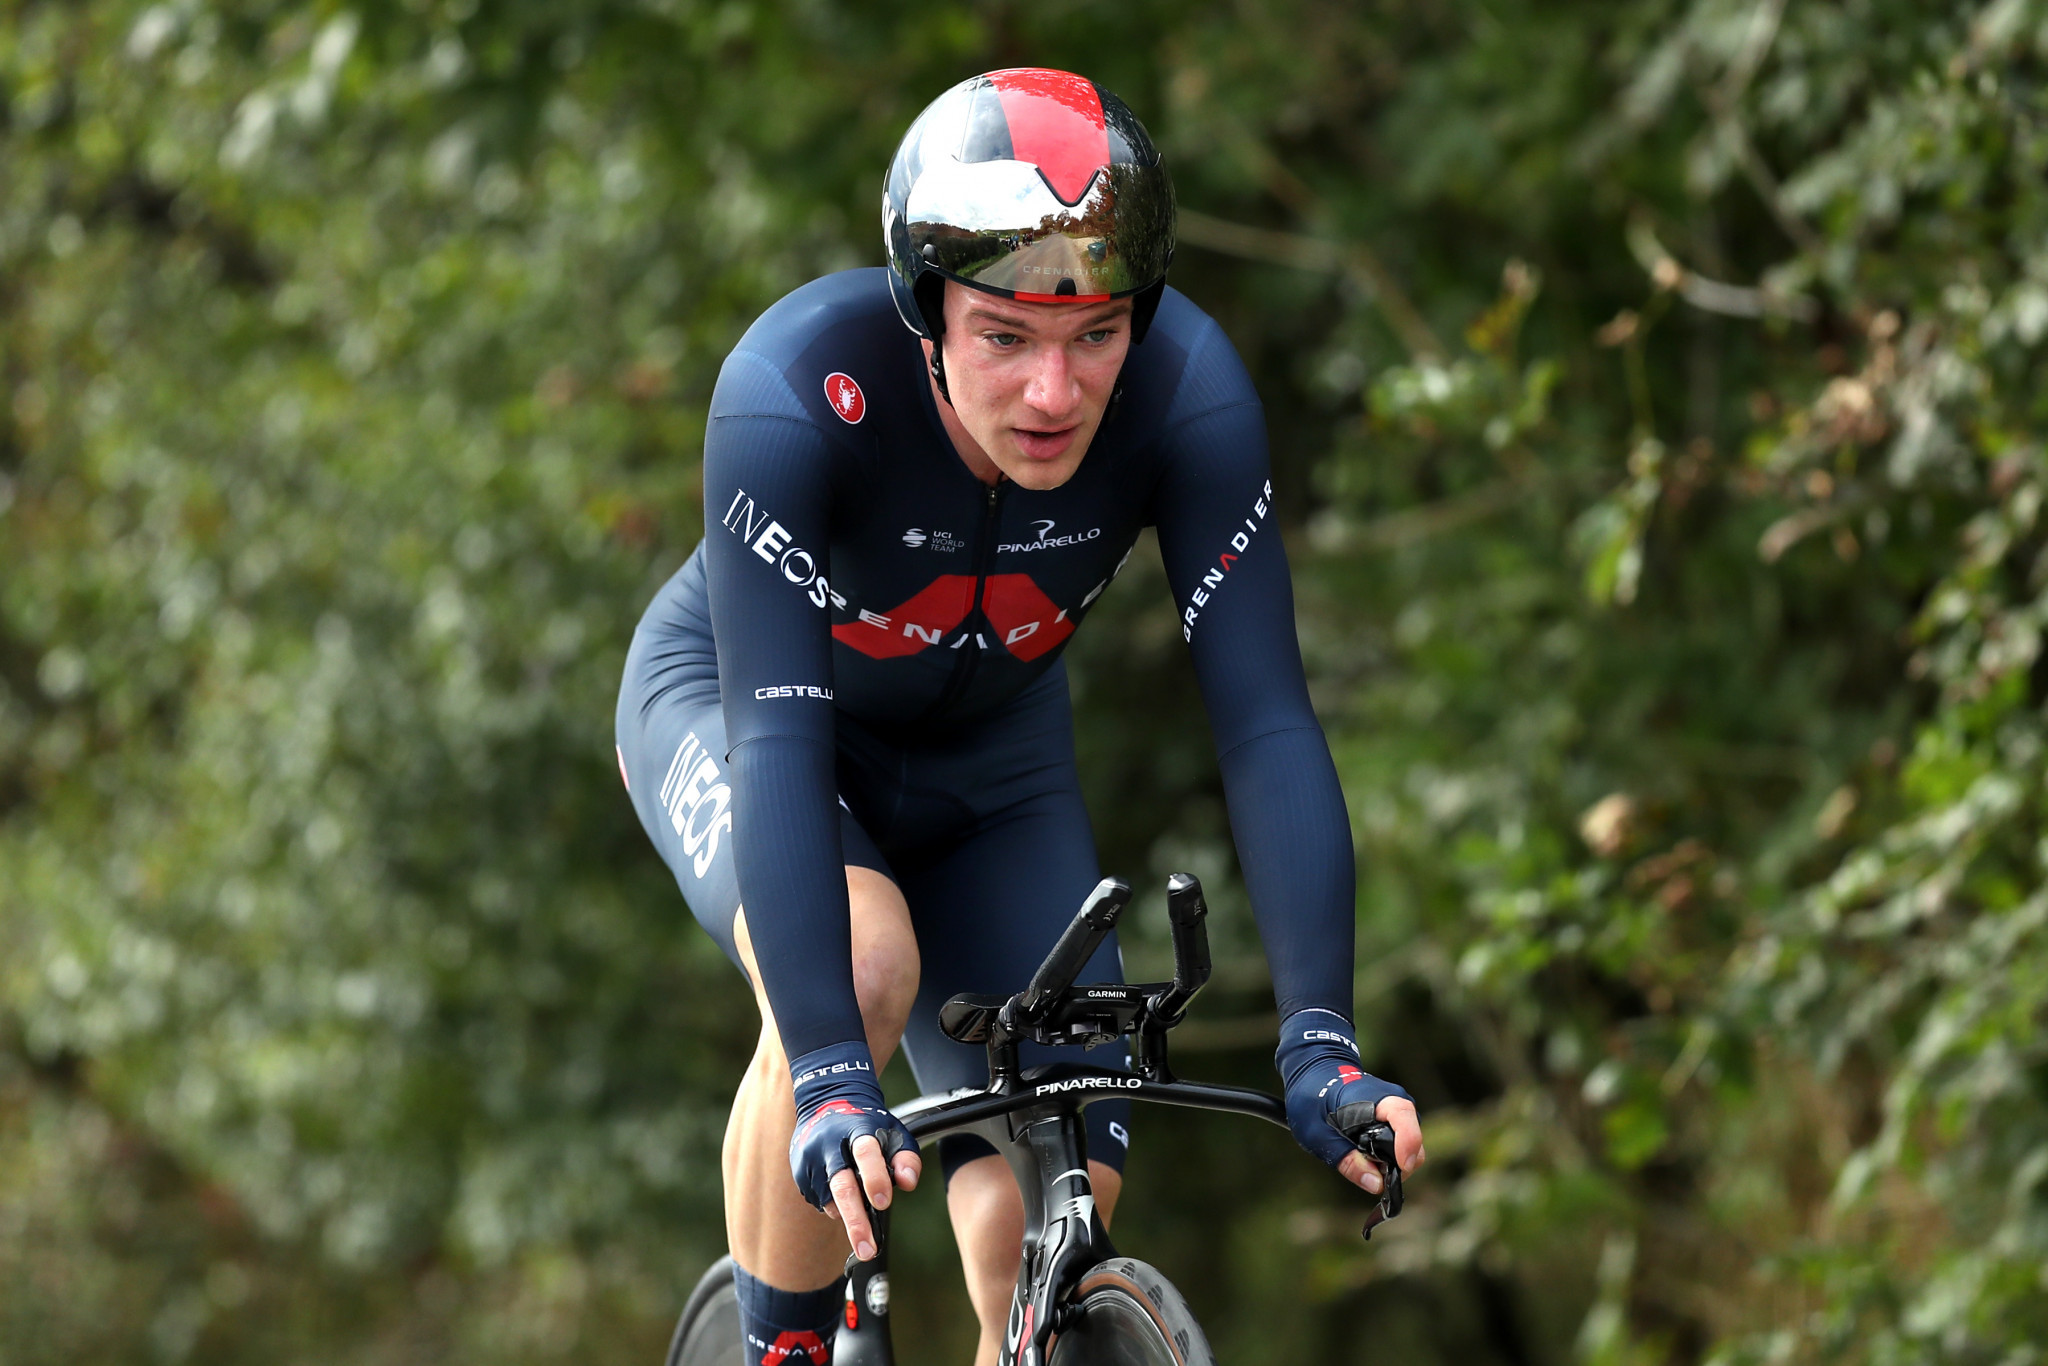 Hayter dominates the opening prologue at Tour de Romandie